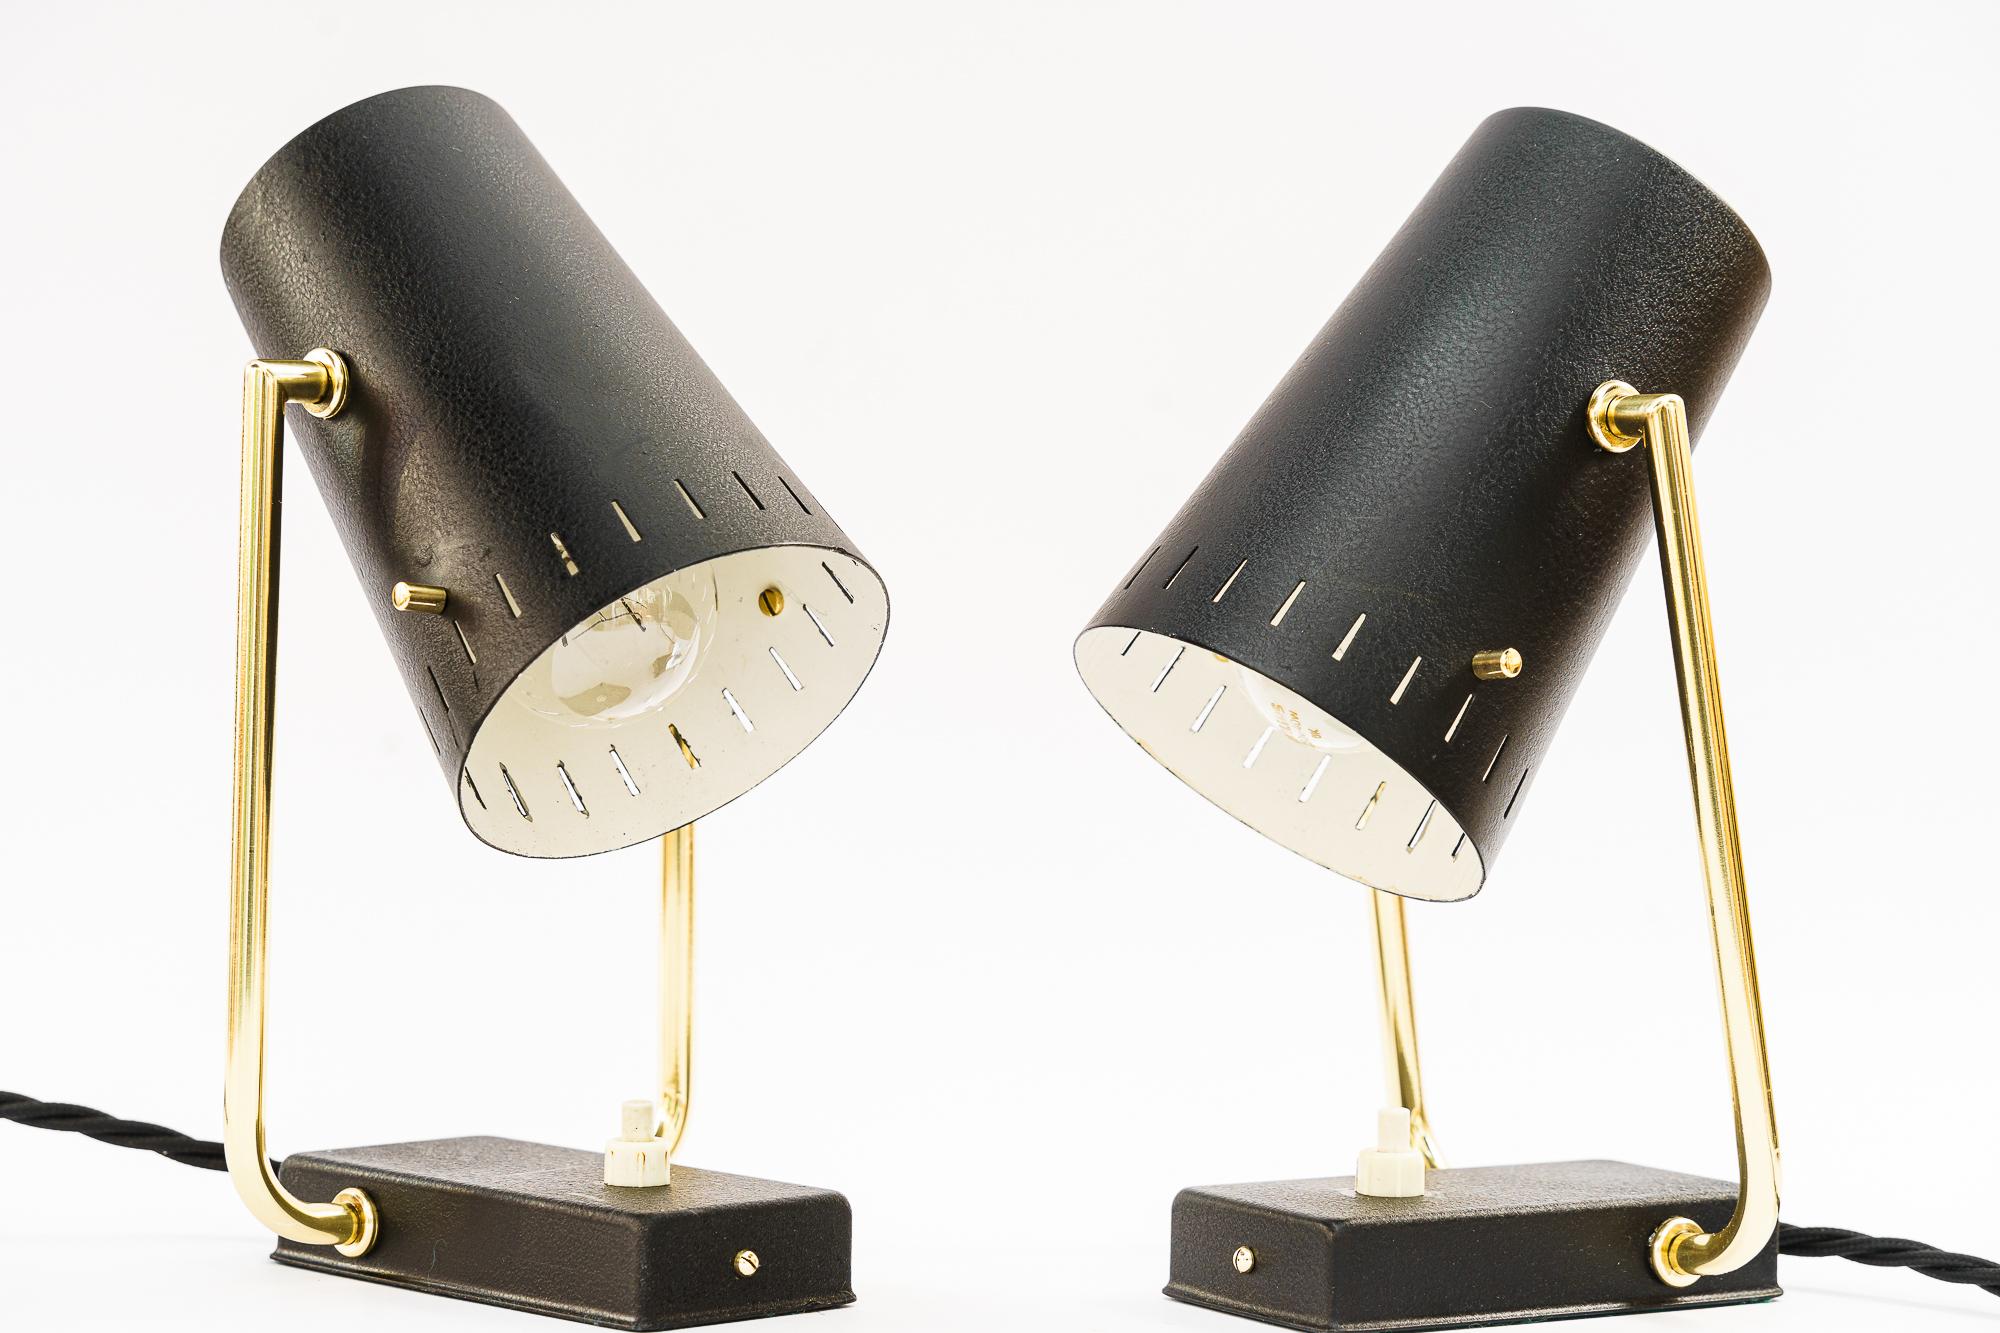 2 Italian table lamps around 1960s
Brass parts polished and stove enameled
Aluminium blackened